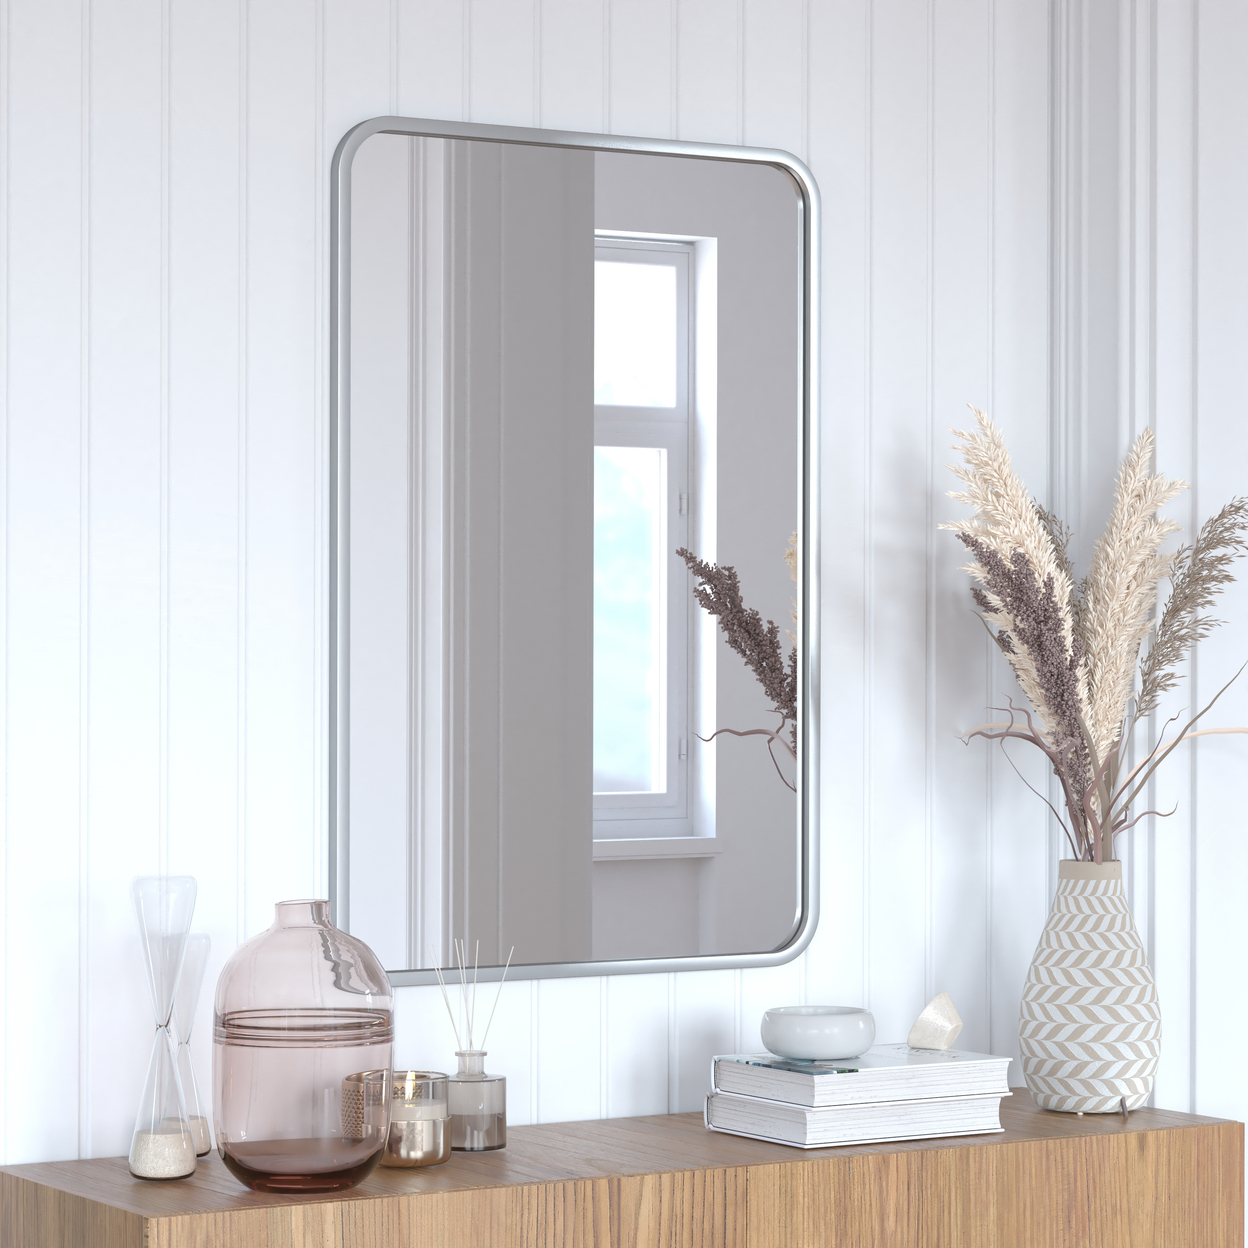 Jada 24 X 36 Decorative Wall Mirror - Rounded Corners, Bathroom & Living Room Glass Mirror Hangs Horizontal Or Vertical, Matte Silver